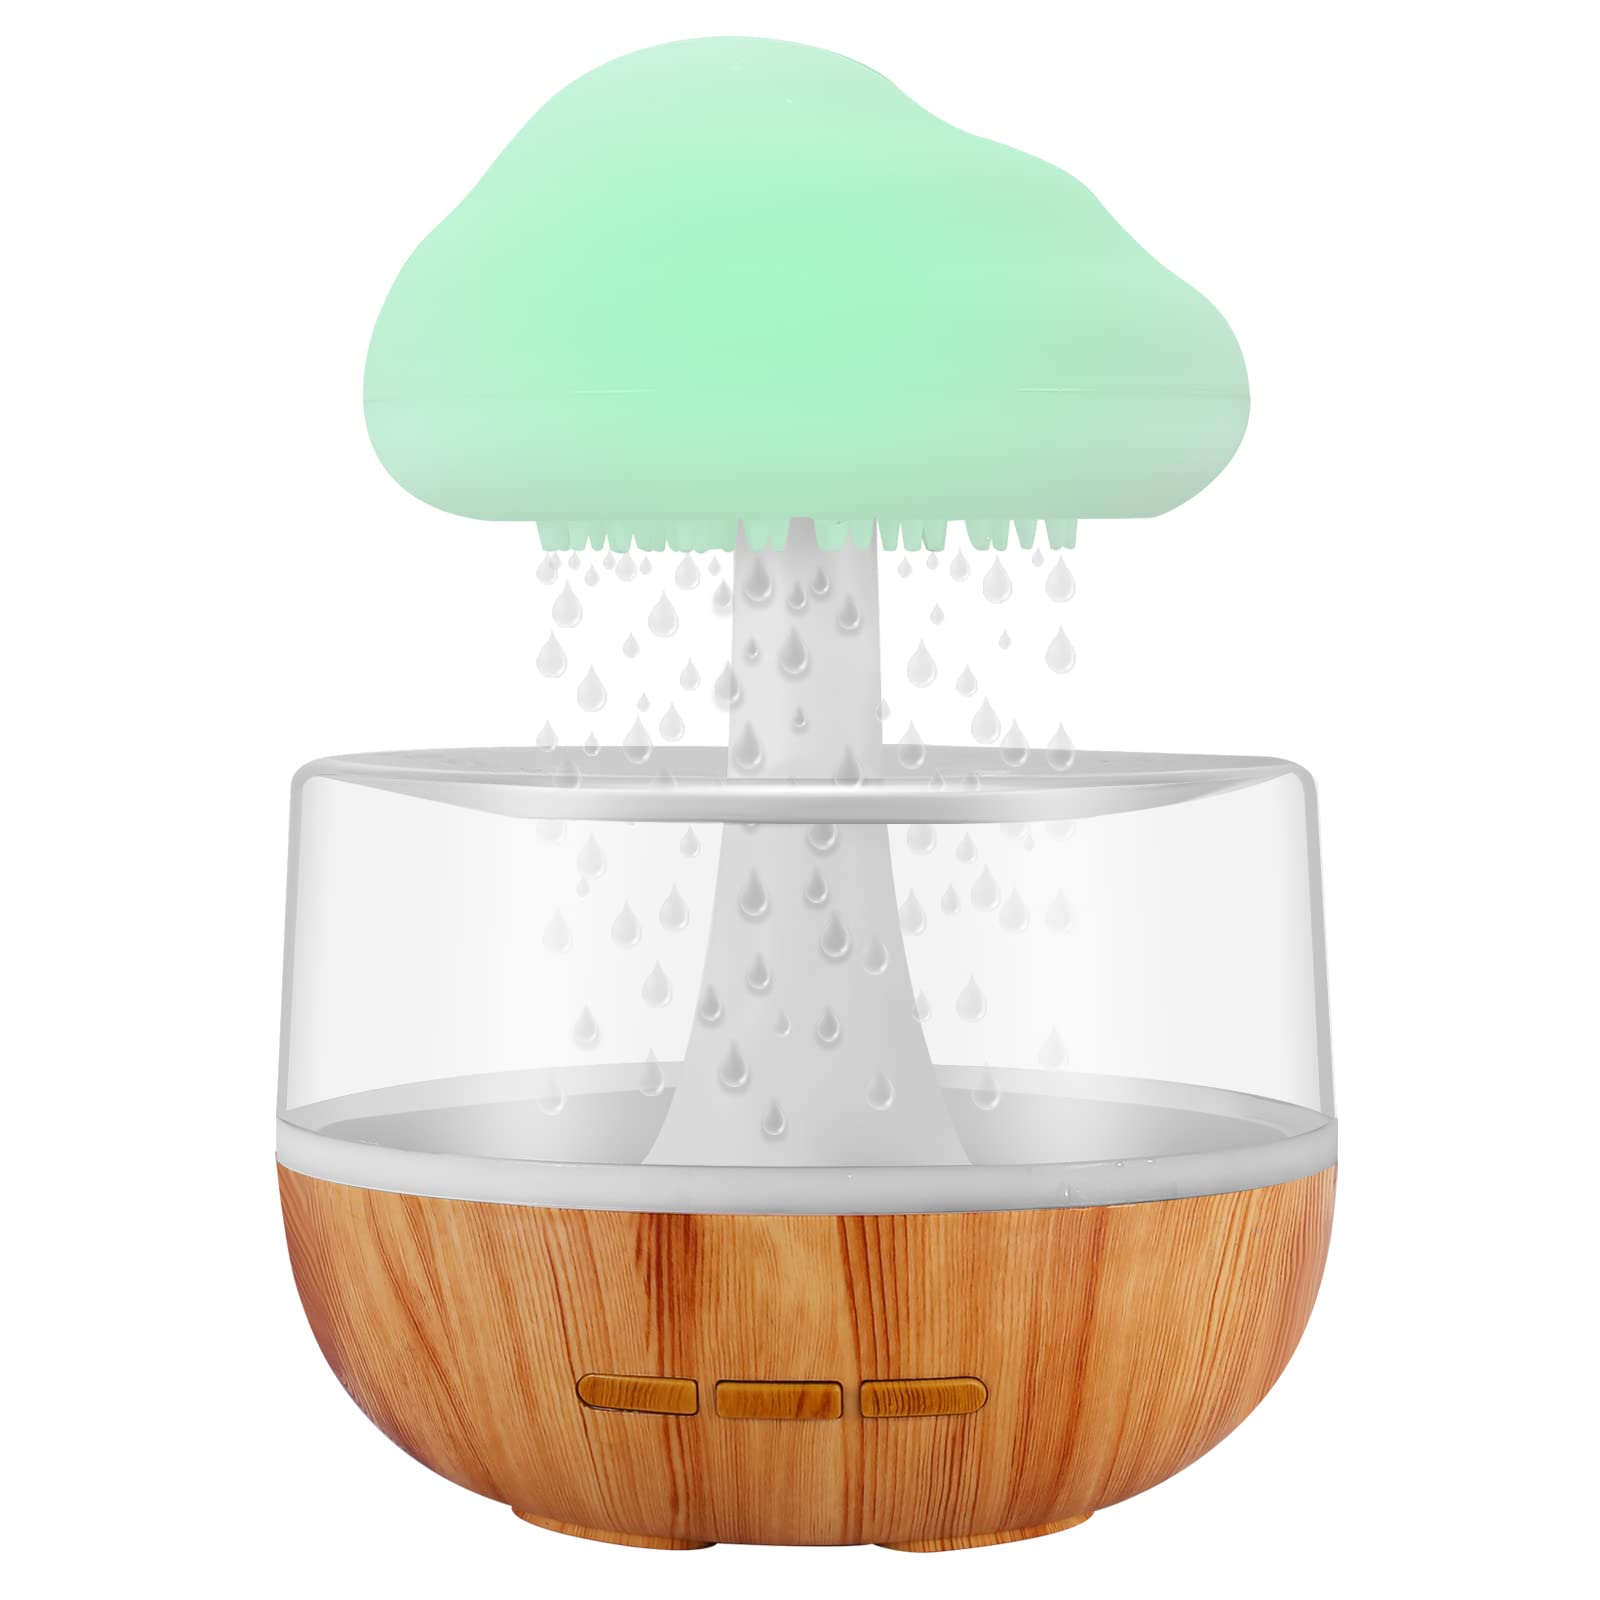 Weljoy Zen Raining Cloud Night Light Aromatherapy Essential Oil Diffuser  Micro Humidifier Desk Fountain Bedside Sleeping Relaxing Mood Water Drop